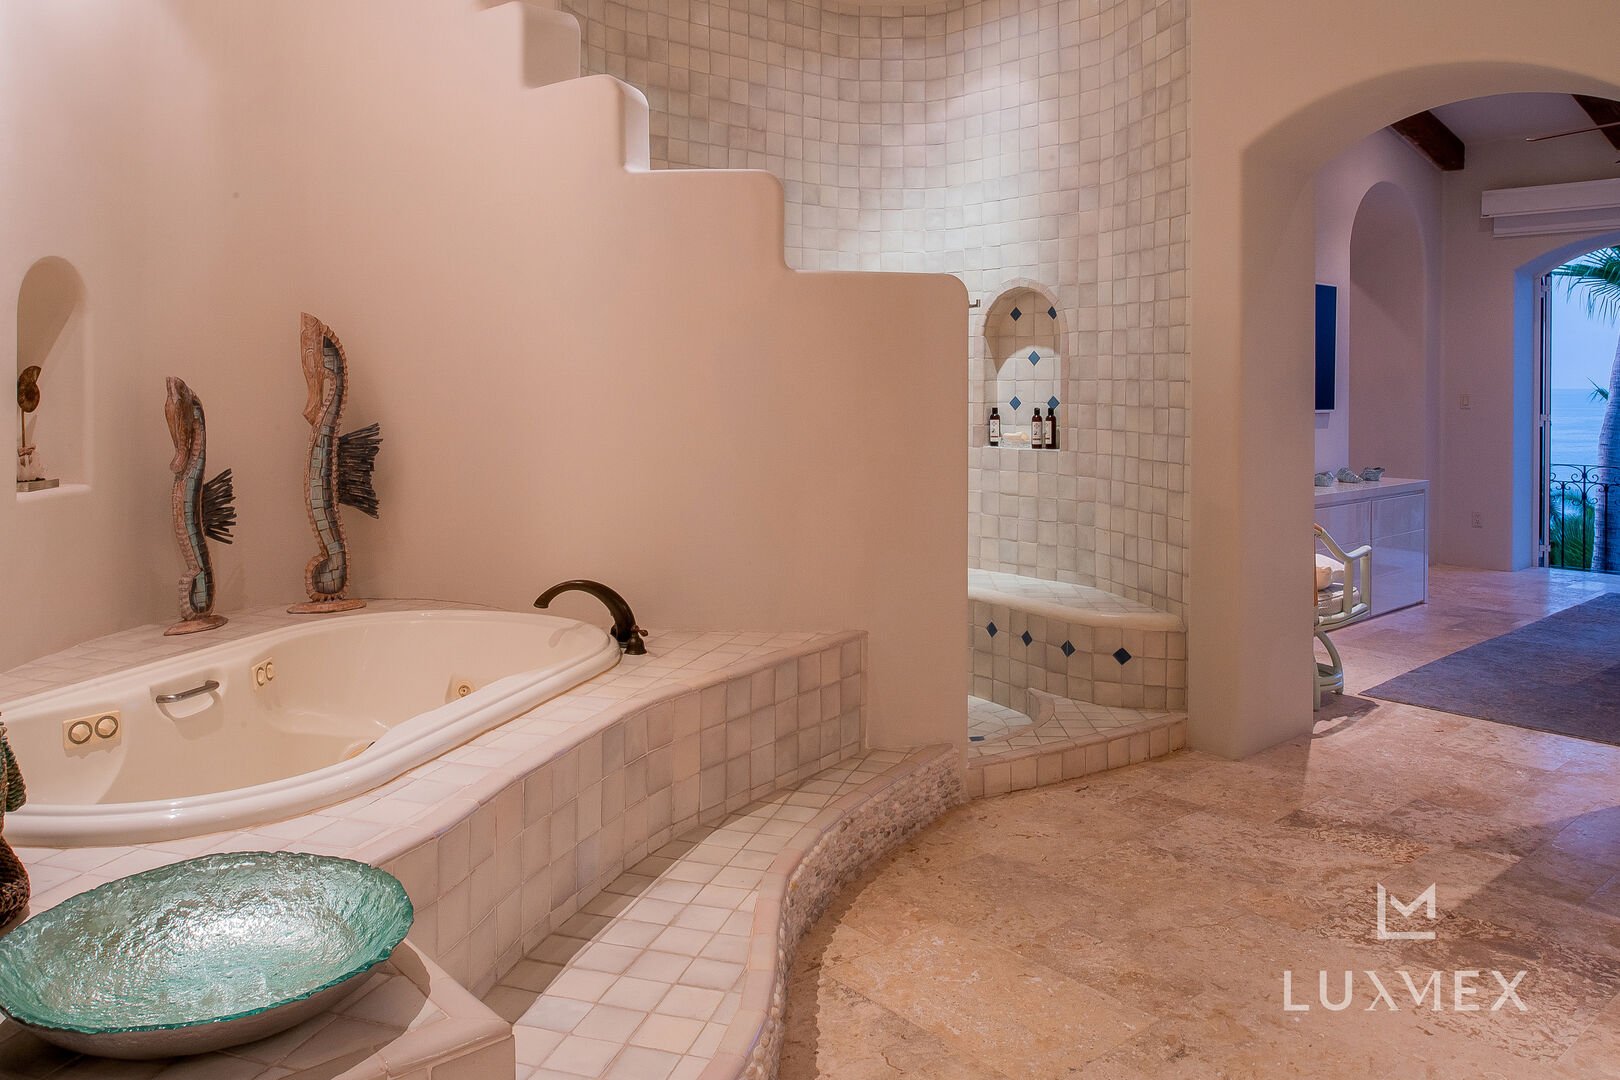 The ornate bathtub area of the master bath of this Los Cabos Luxury Vacation Villa.